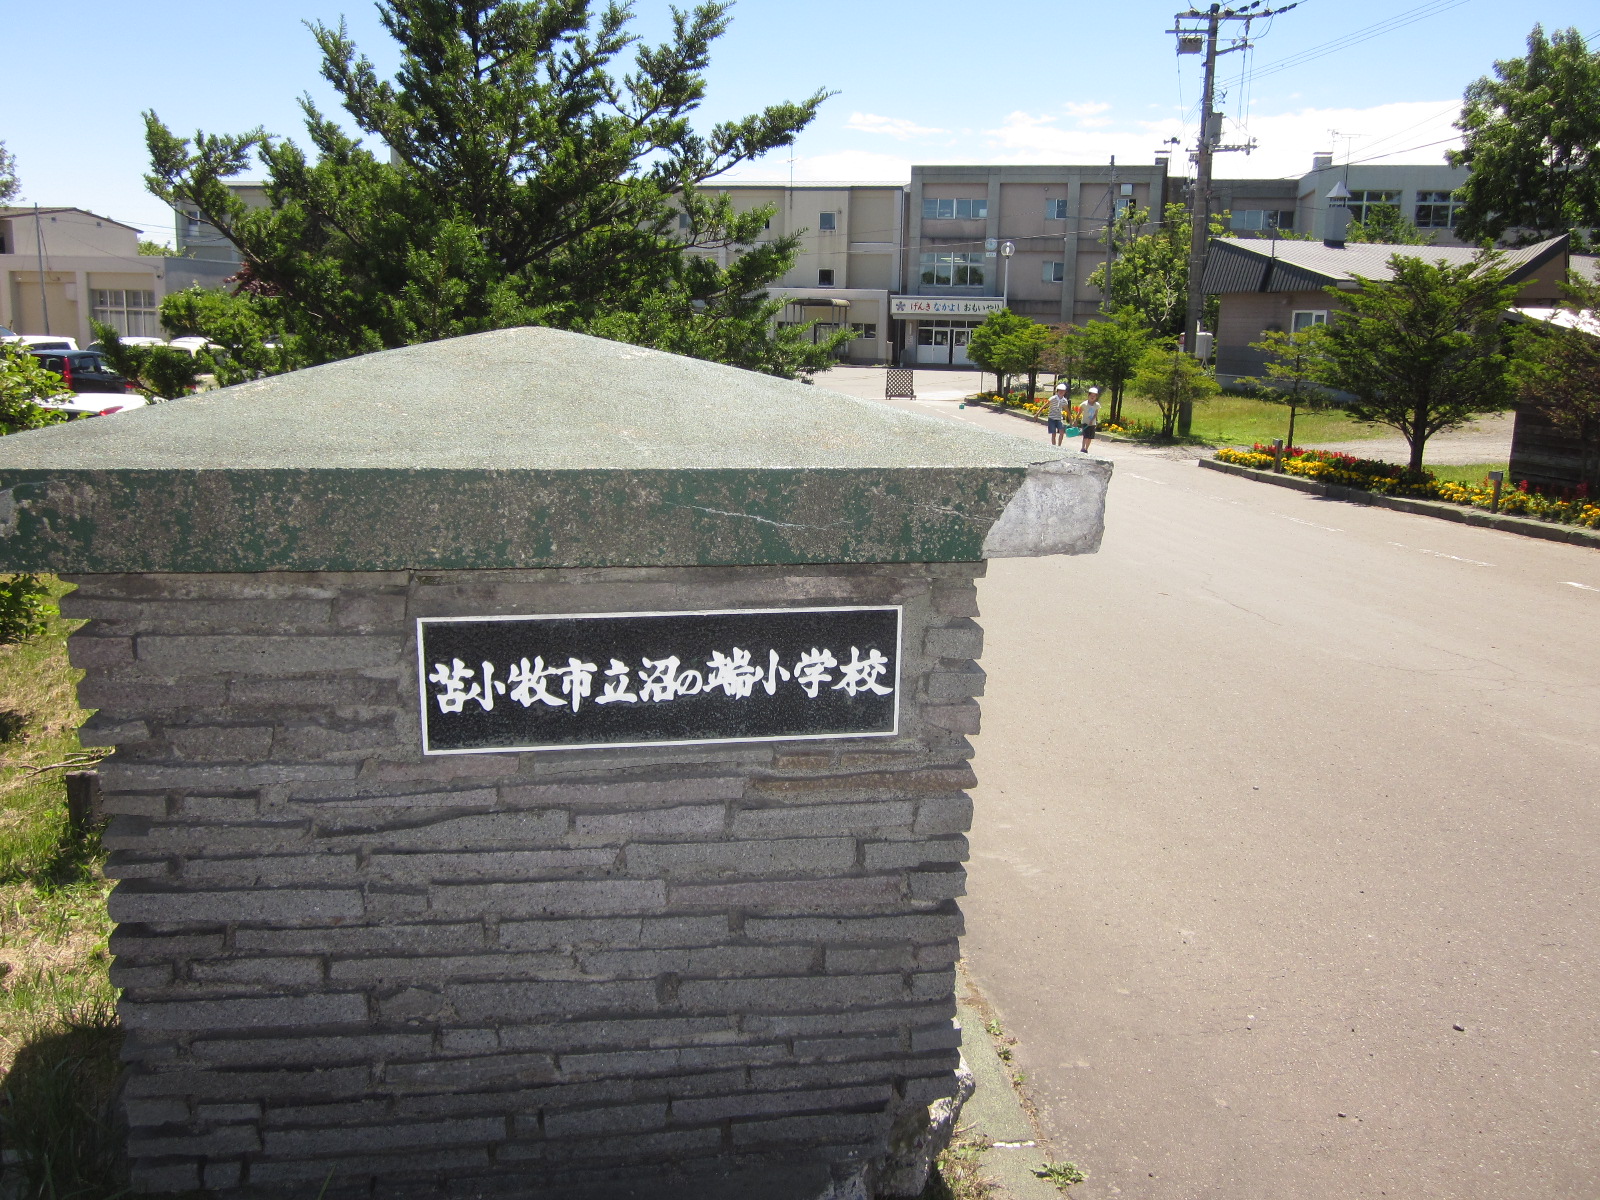 Primary school. 839m to Tomakomai Municipal Numanohata elementary school (elementary school)